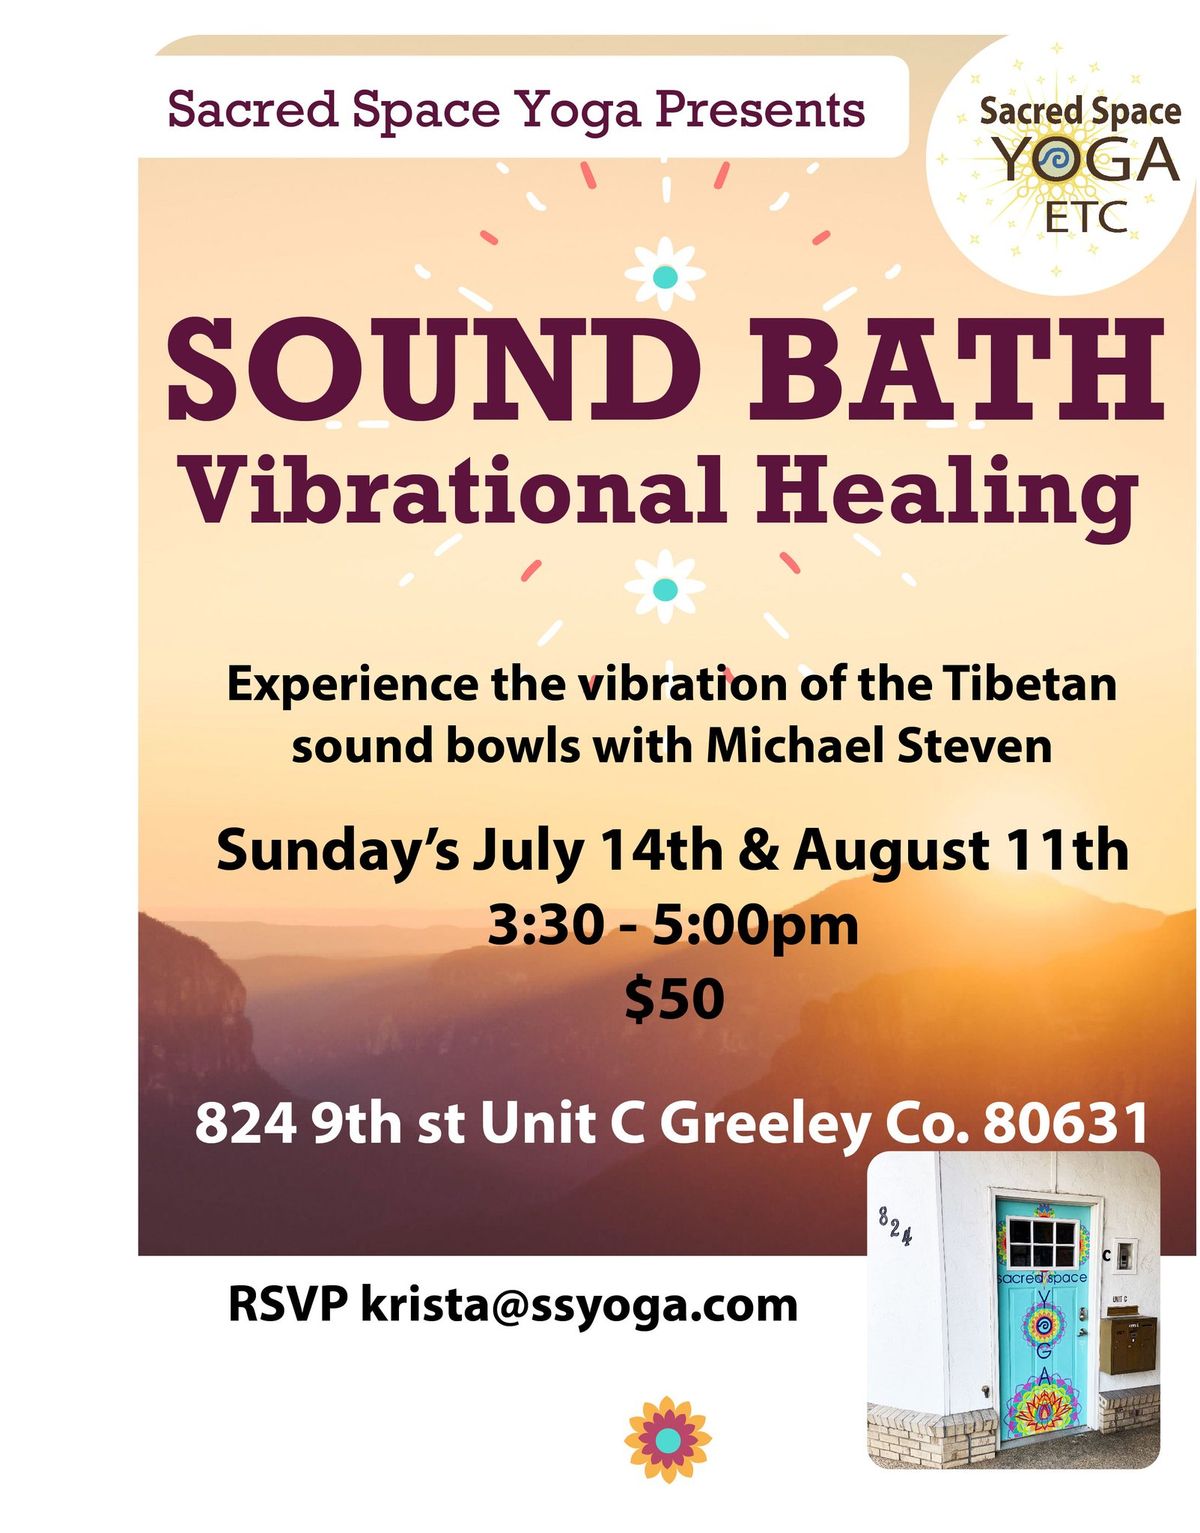 Sound Bath Vibrational Healing with Michael Steven